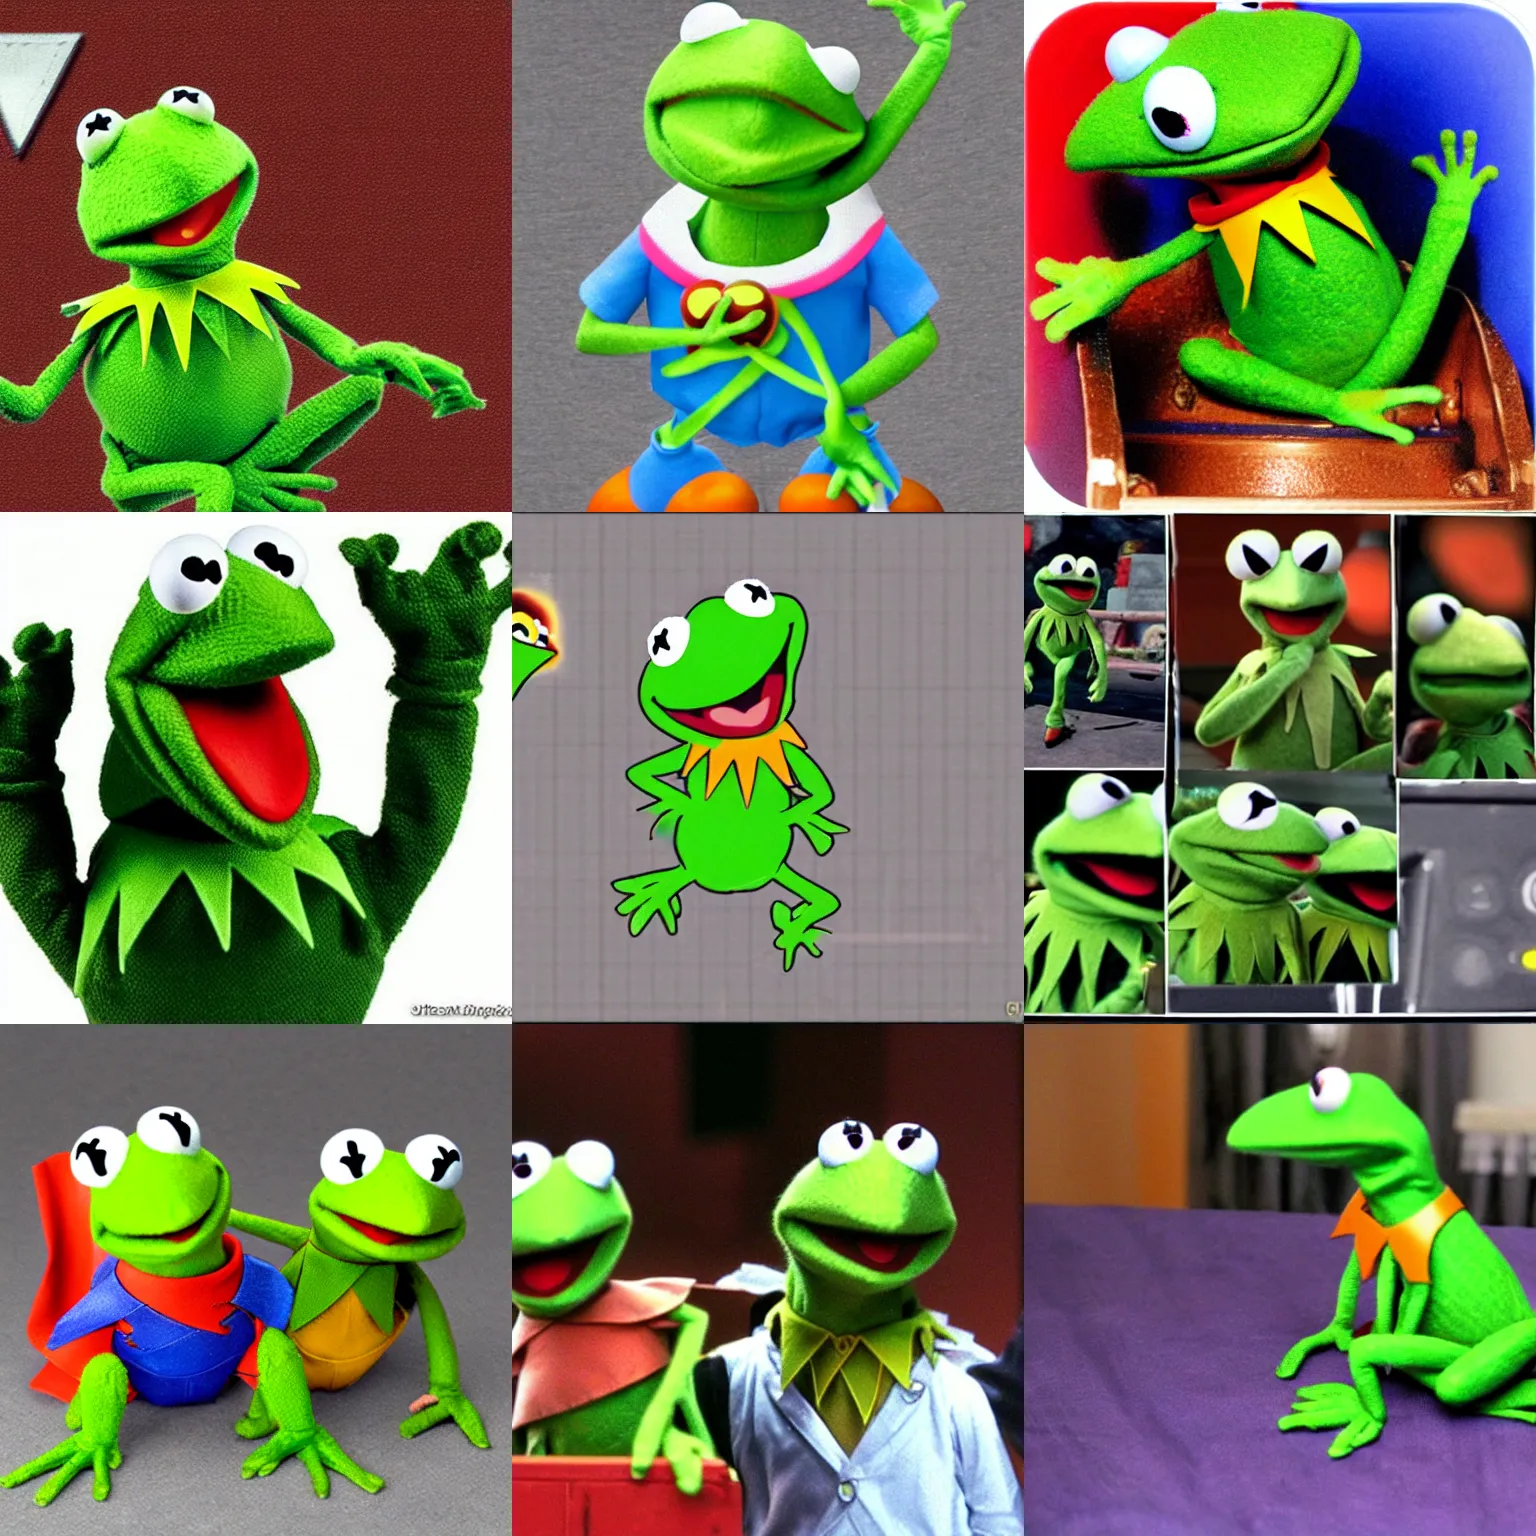 Prompt: Kermit the frog joins the battle! Super Smash Bros Melee